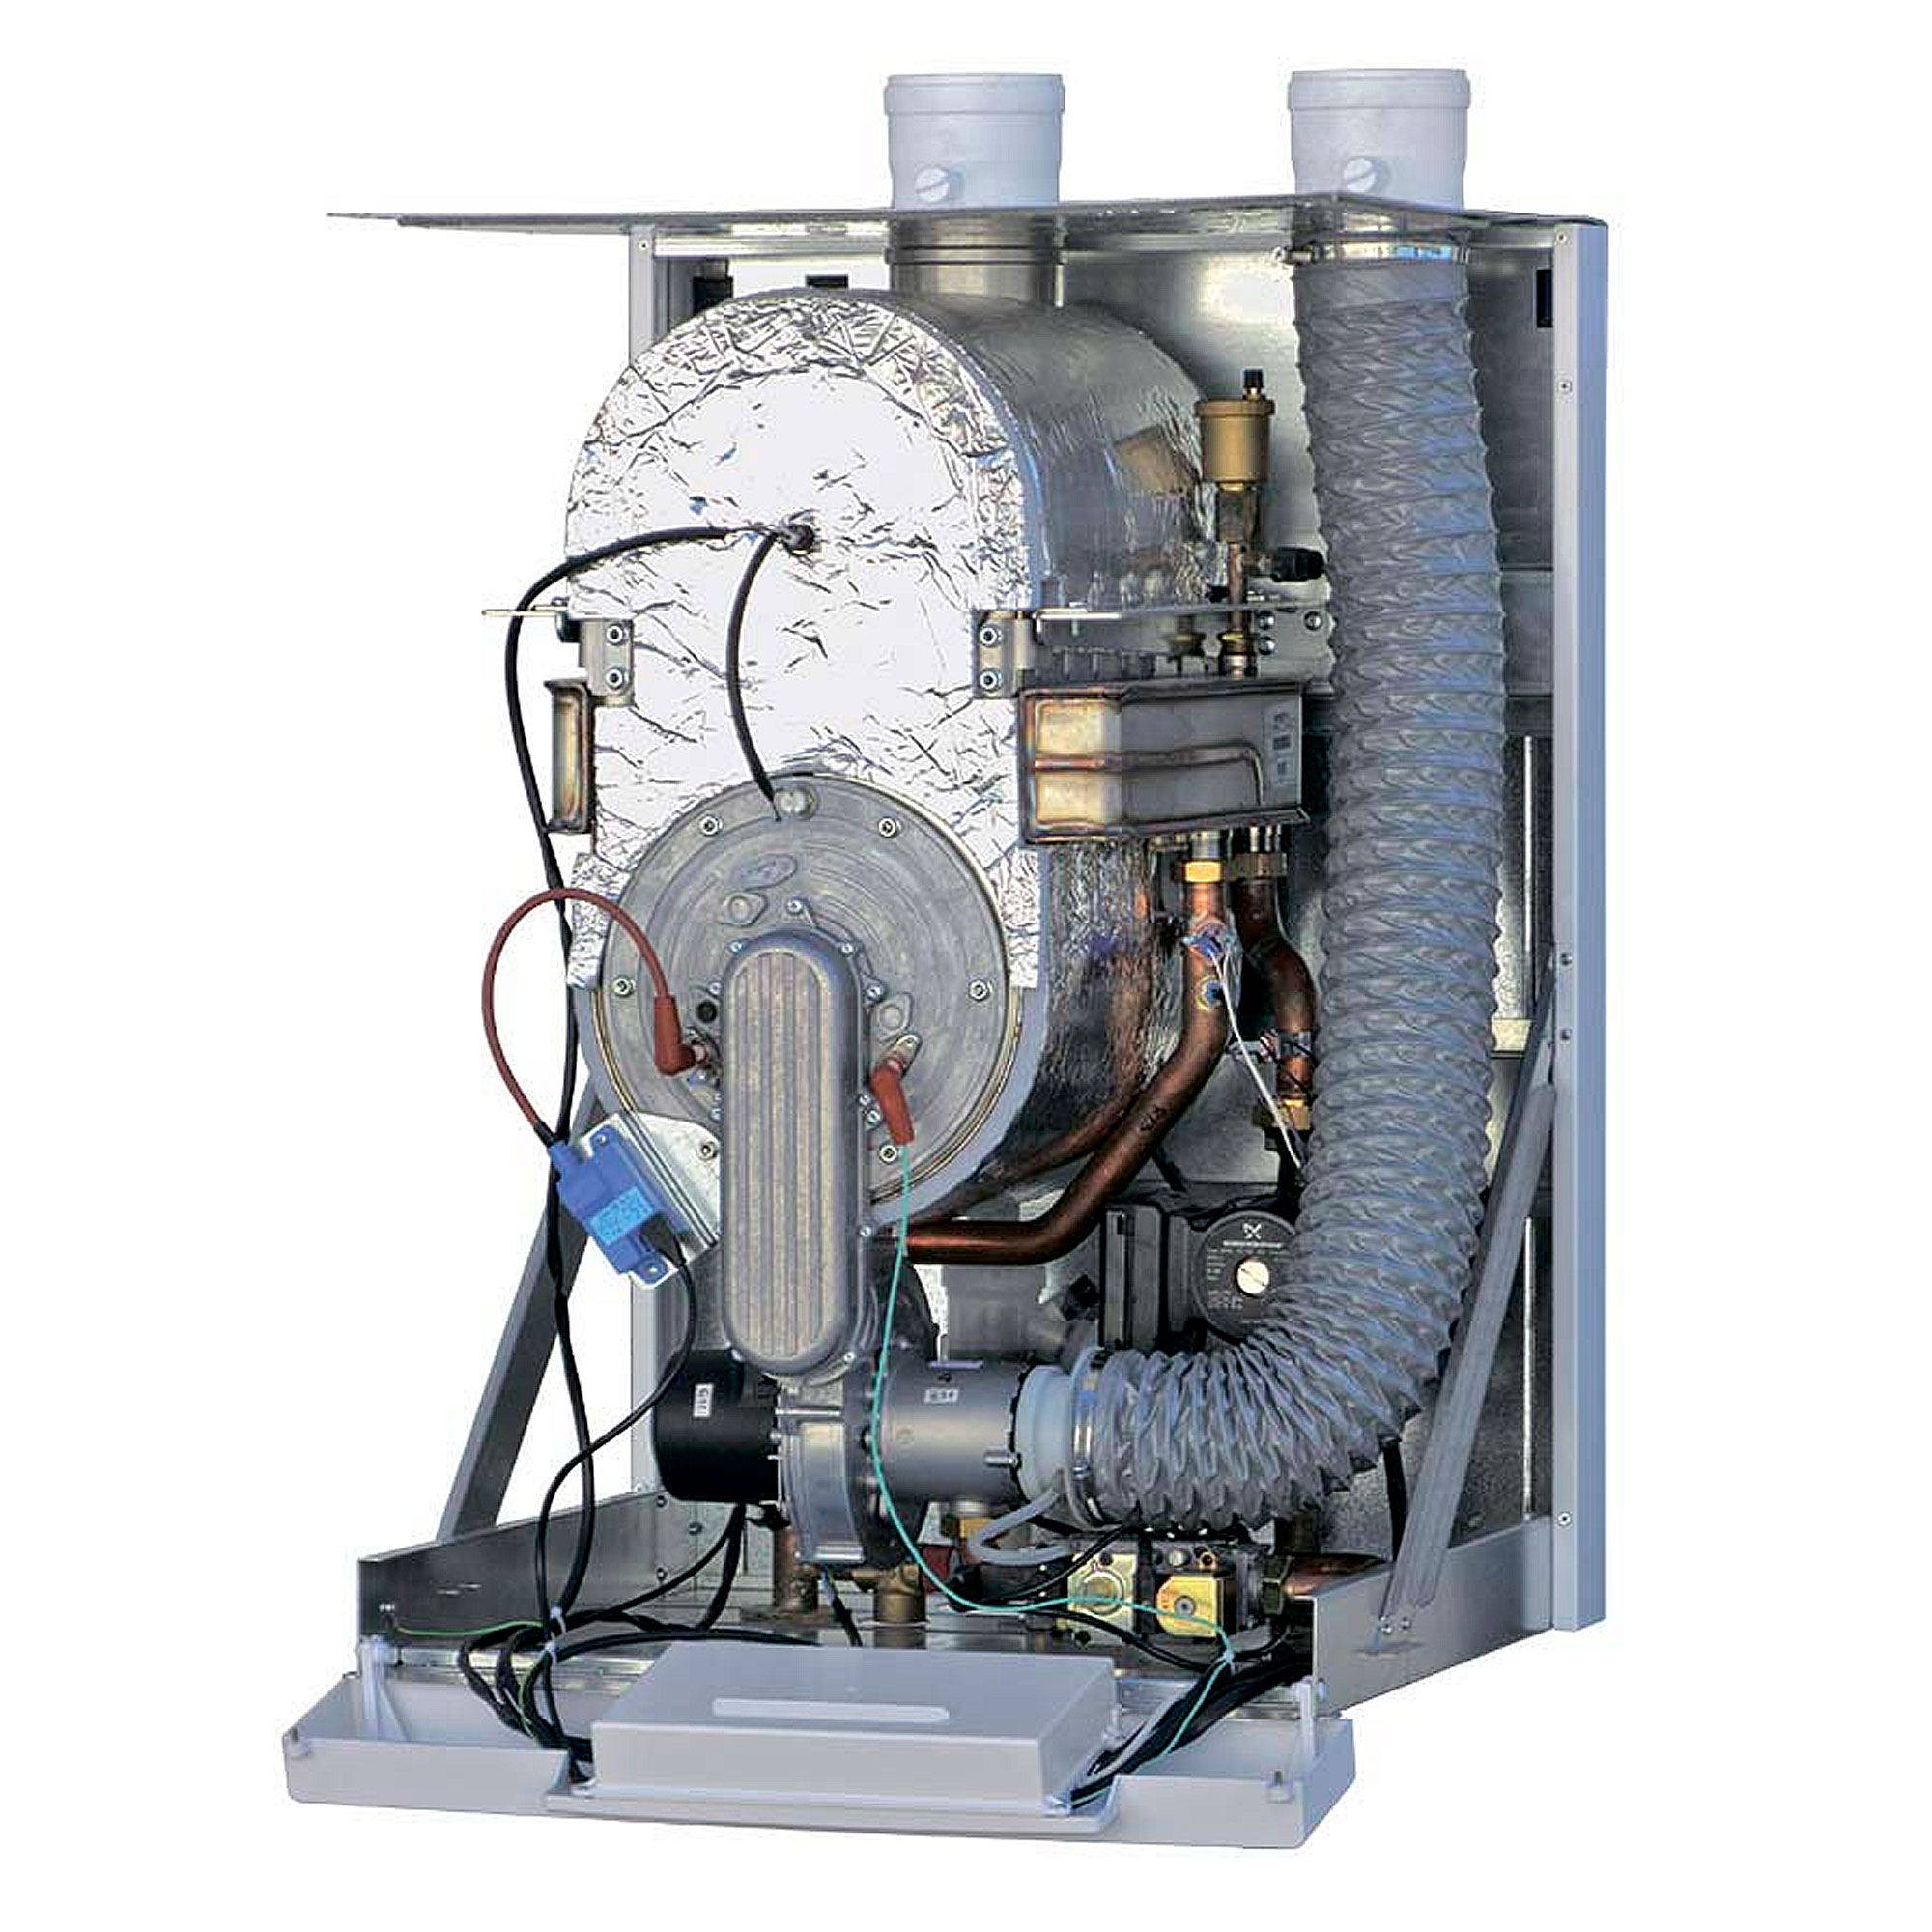 Газовый котел Italtherm Time Power 100 K цена 0 грн - фотография 2